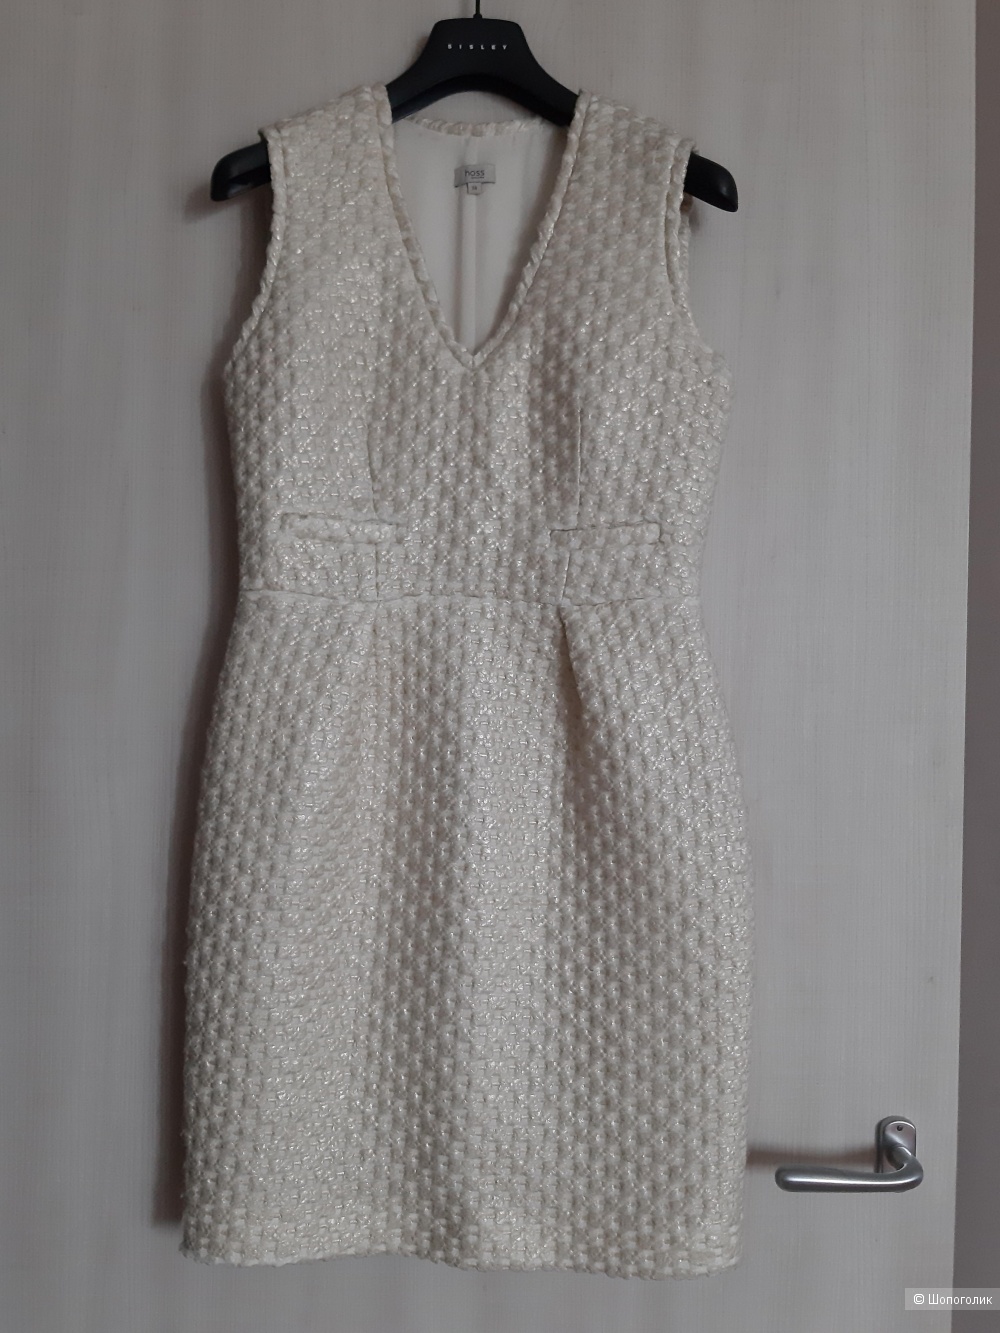 Платье Hoss Intropia, размер 38